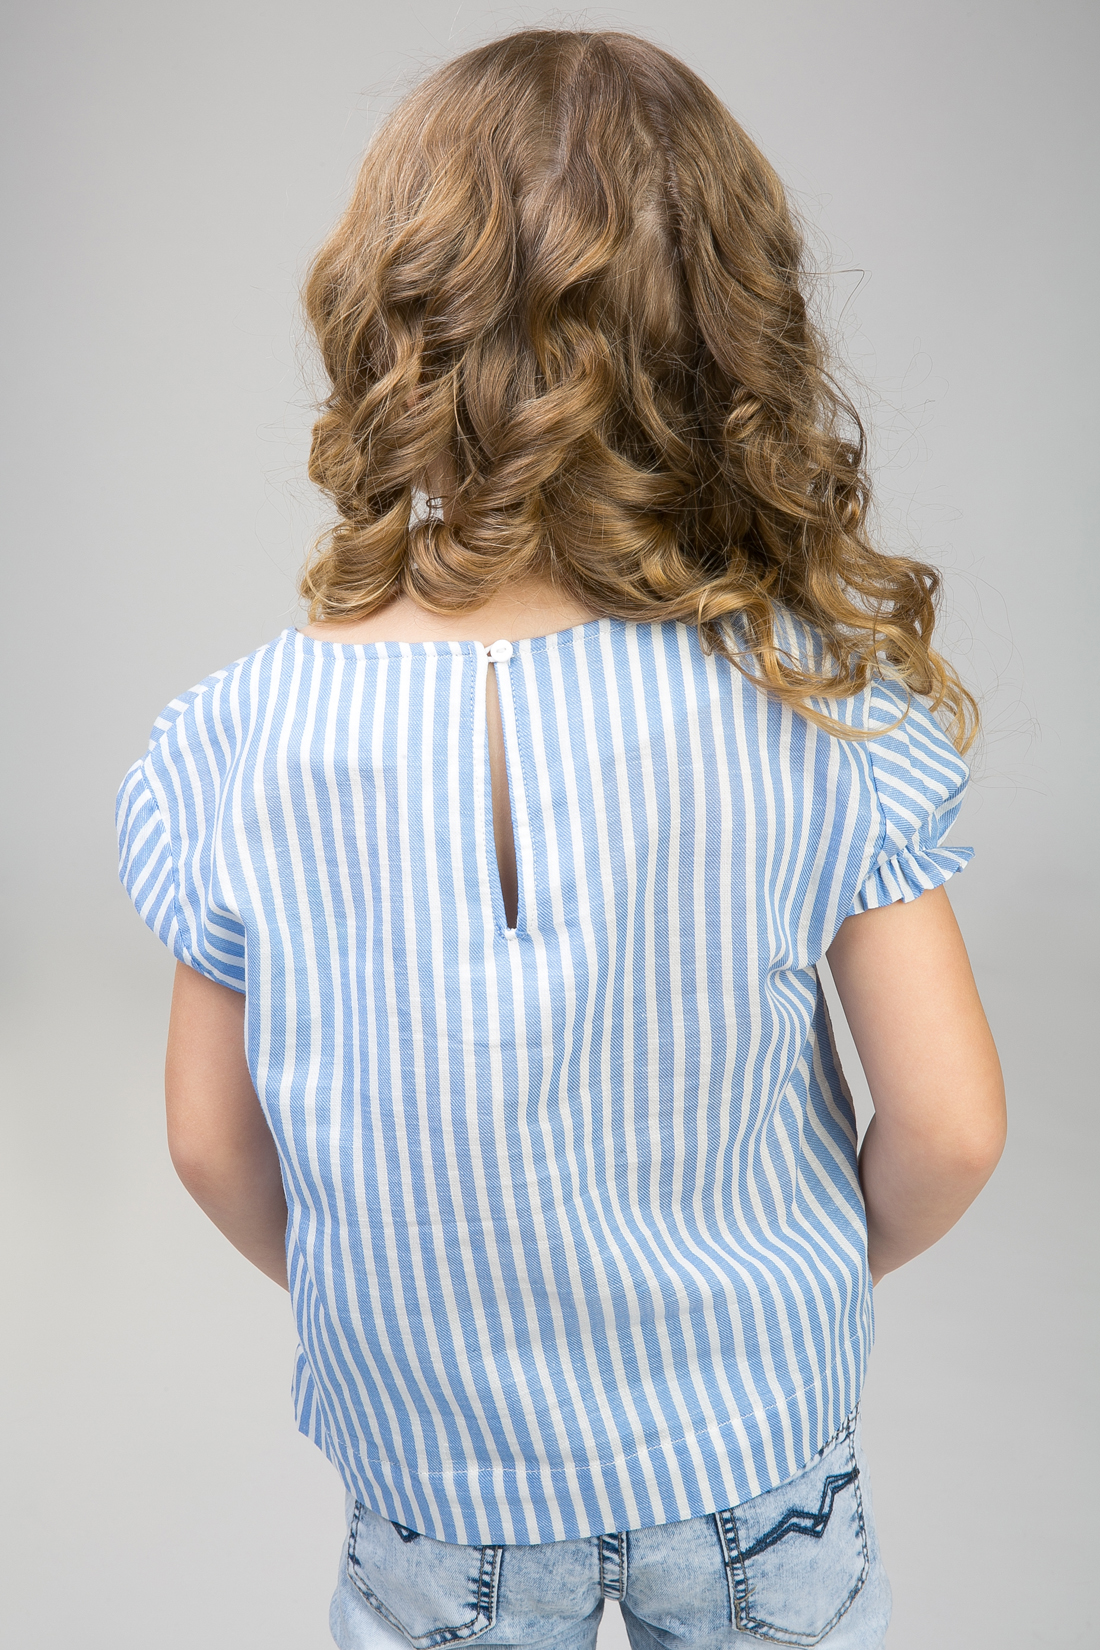 Блузка для девочки (арт. baon BK198002), размер 122-128, цвет angel blue striped#голубой Блузка для девочки (арт. baon BK198002) - фото 2